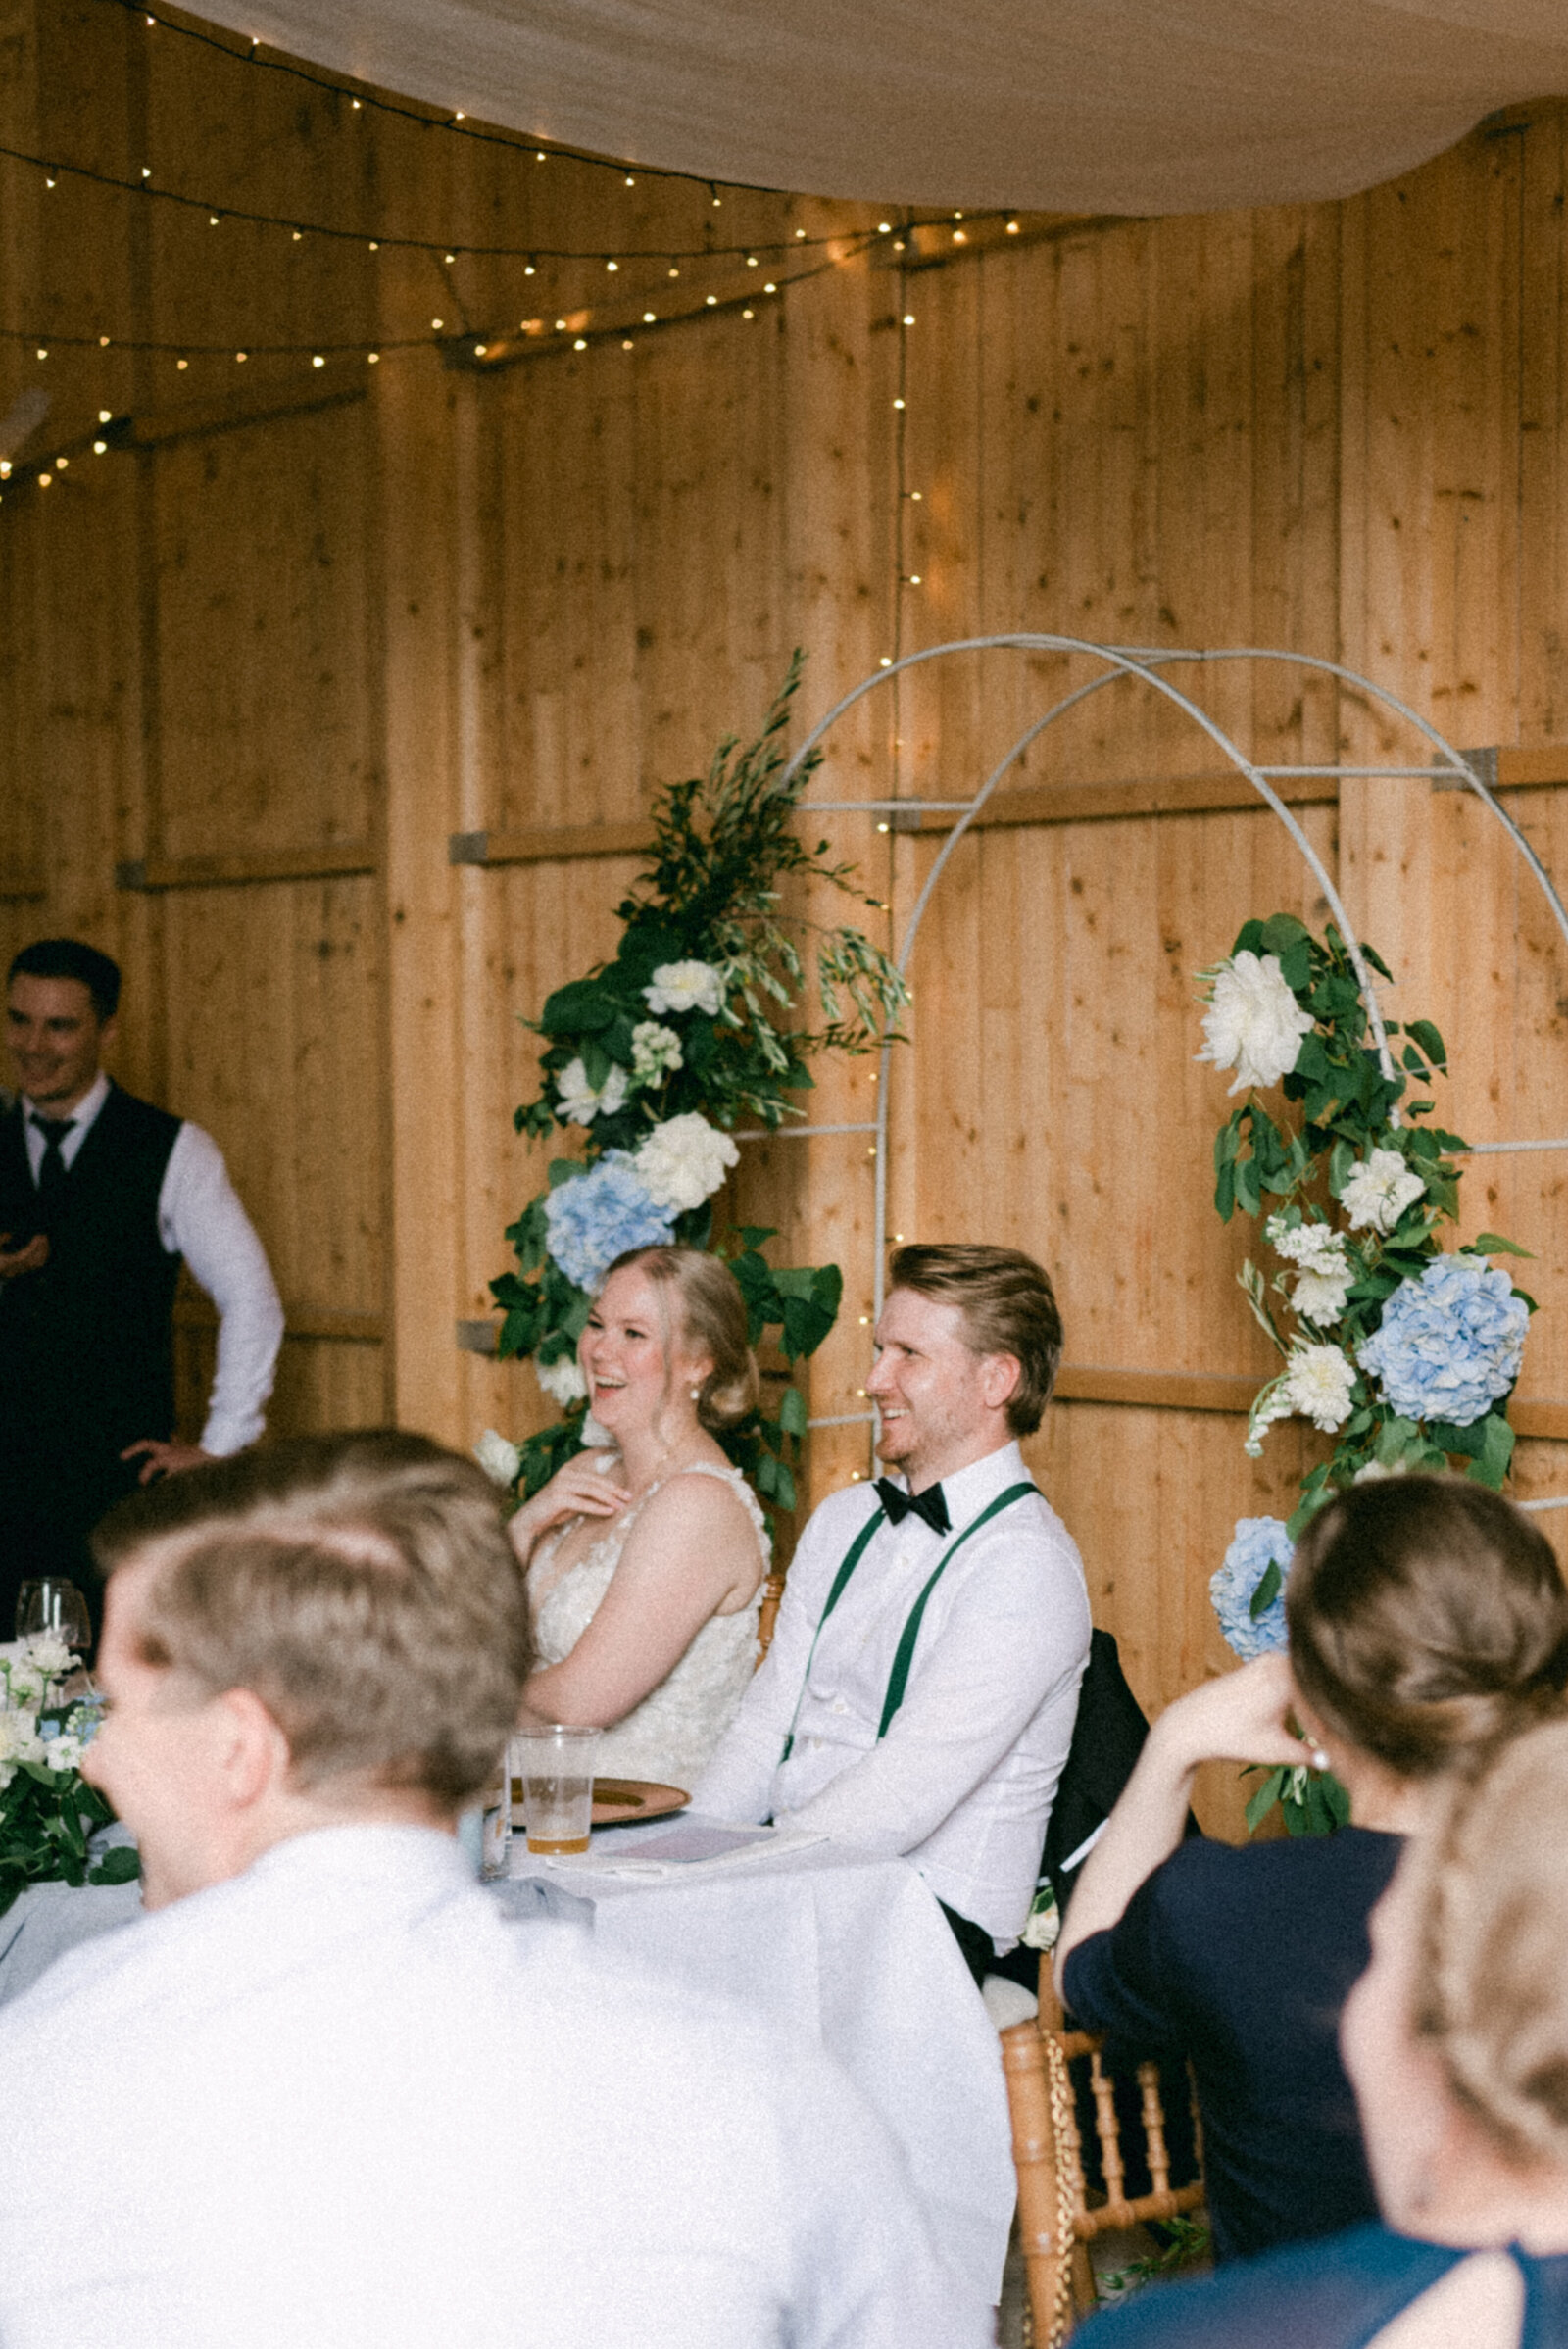 Wedding couple listening to a speechin an image photographed by wedding photographer Hannika Gabrielsson.